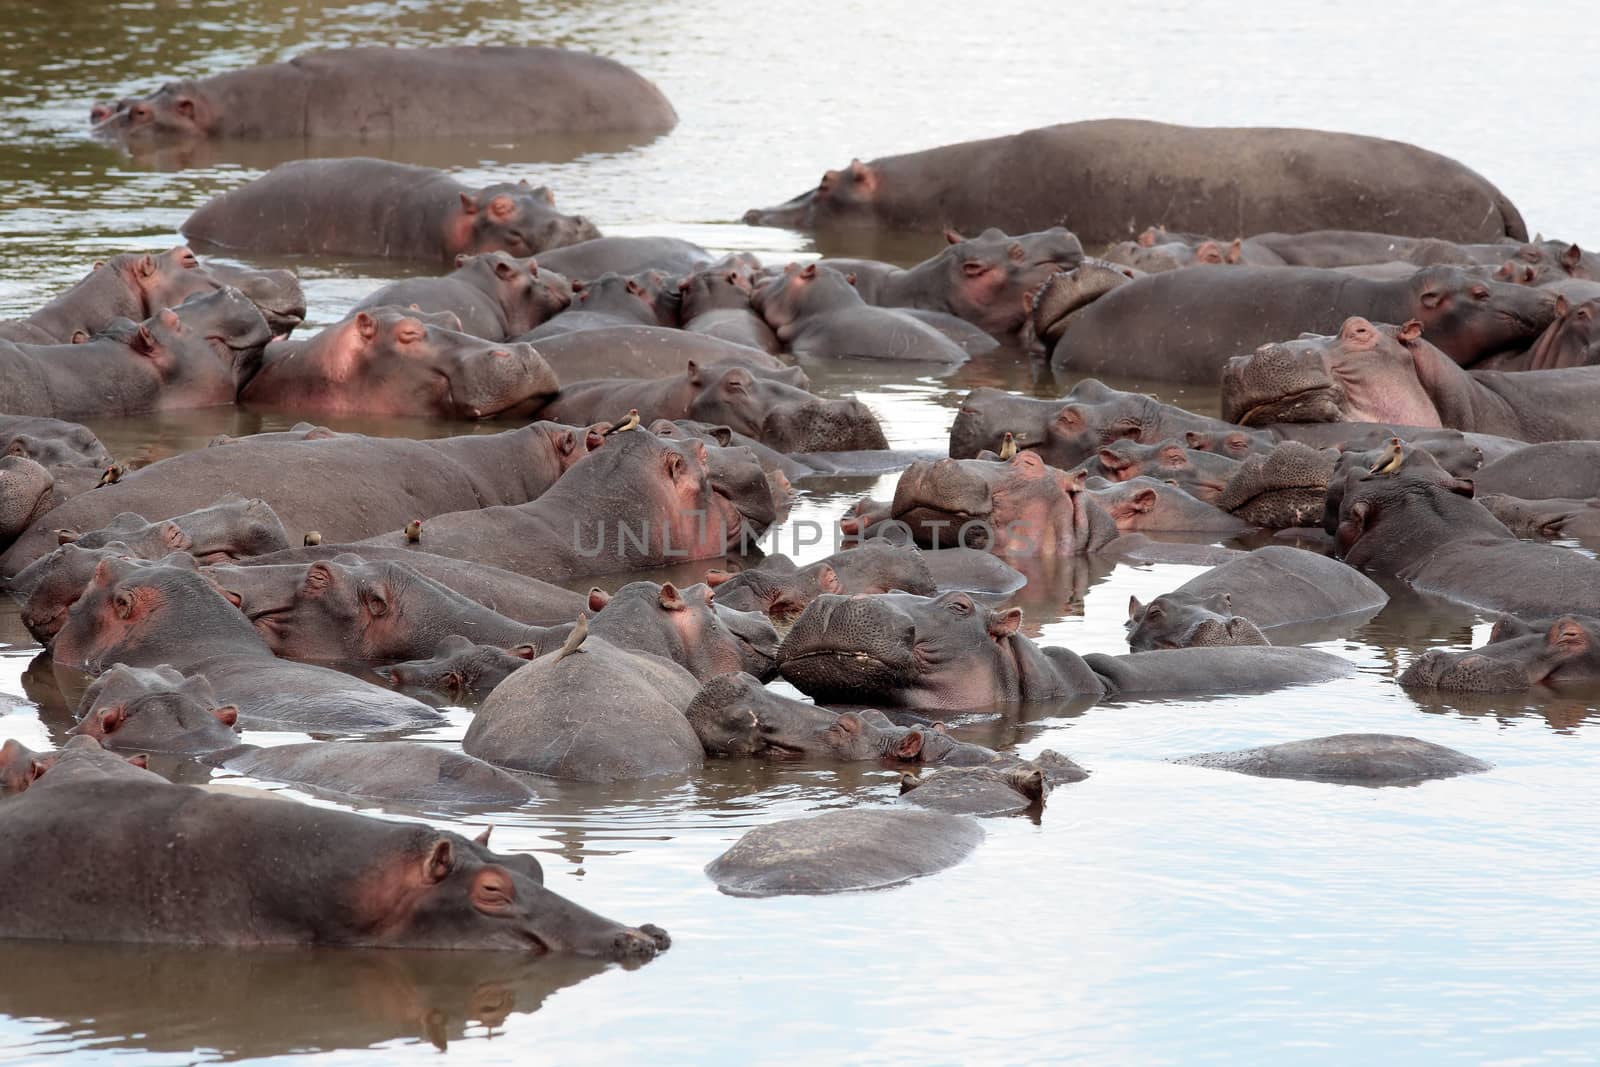  Hippopotamus masai mara river kenya by PIXSTILL